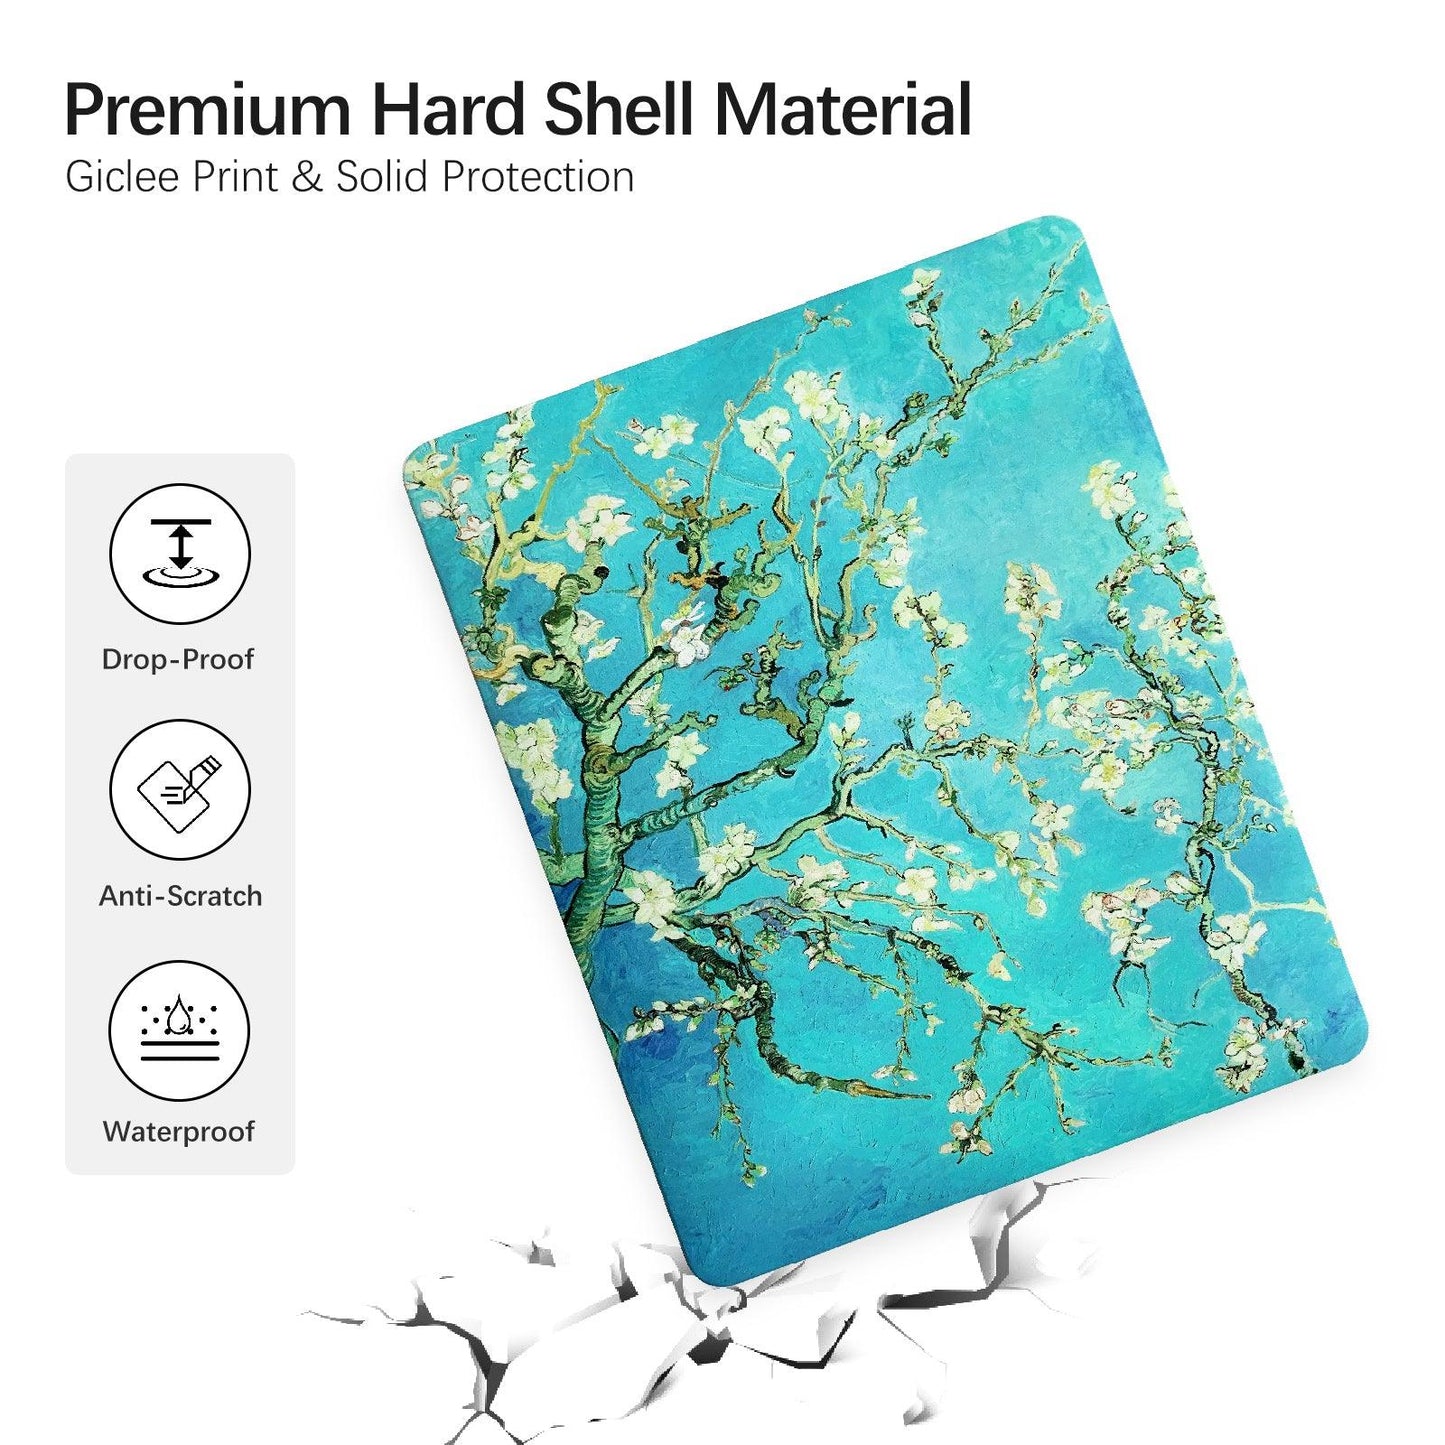 MacBook Pro 13 Inch Art Case, A1706/A1989/A2159 (Almond Blossom by Van Gogh) - Berkin Arts